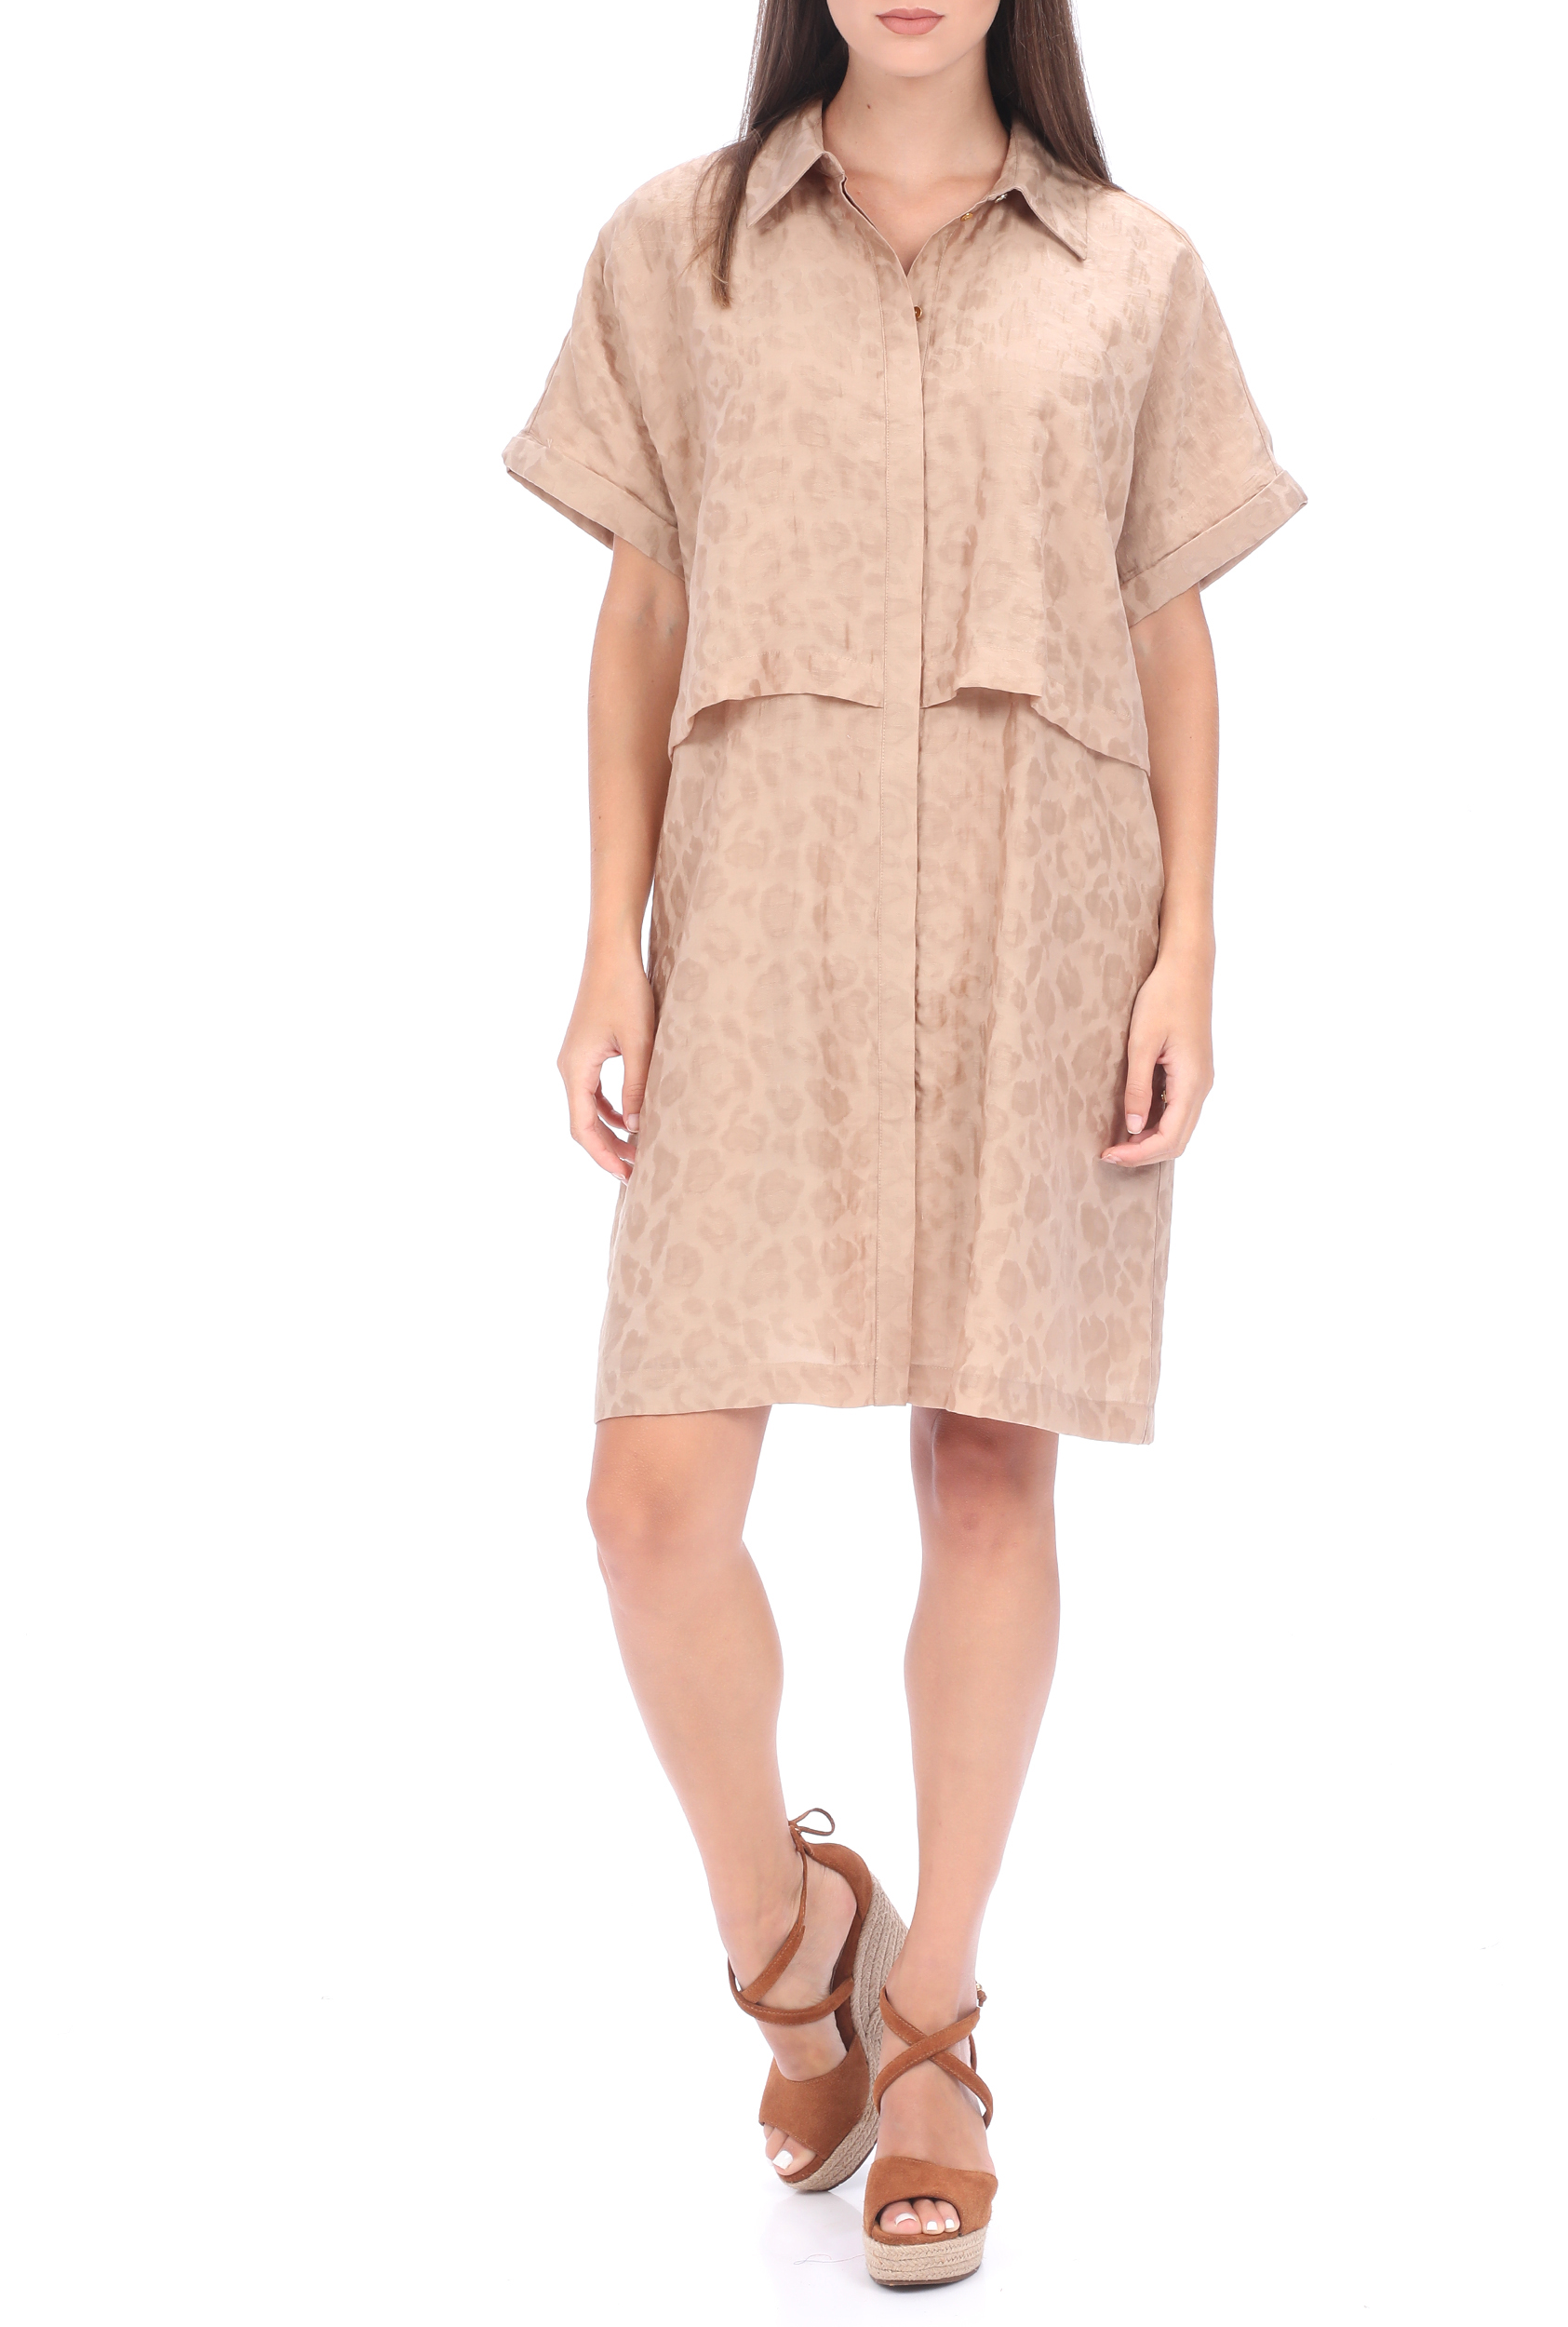 SCOTCH & SODA – Γυναικειο mini φορεμα SCOTCH & SODA shirt dress μπεζ